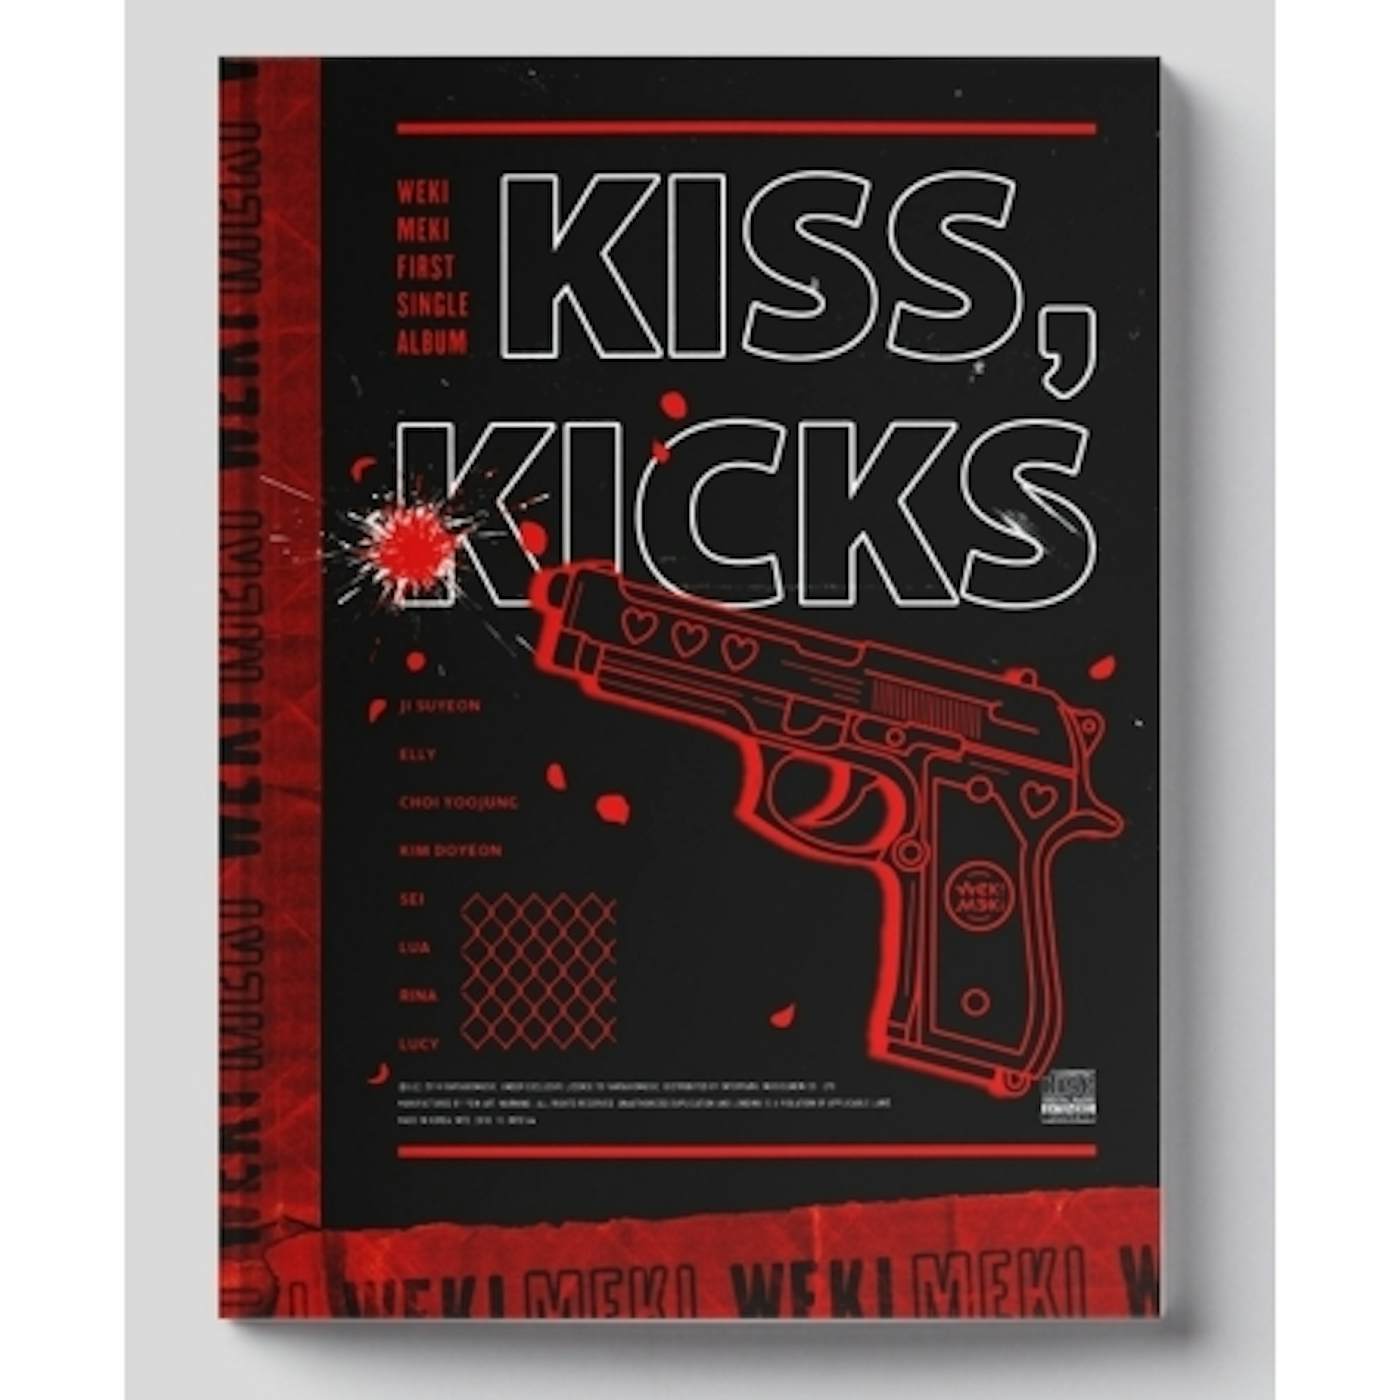 Weki Meki KISS KICKS (KICKS VERSION) CD